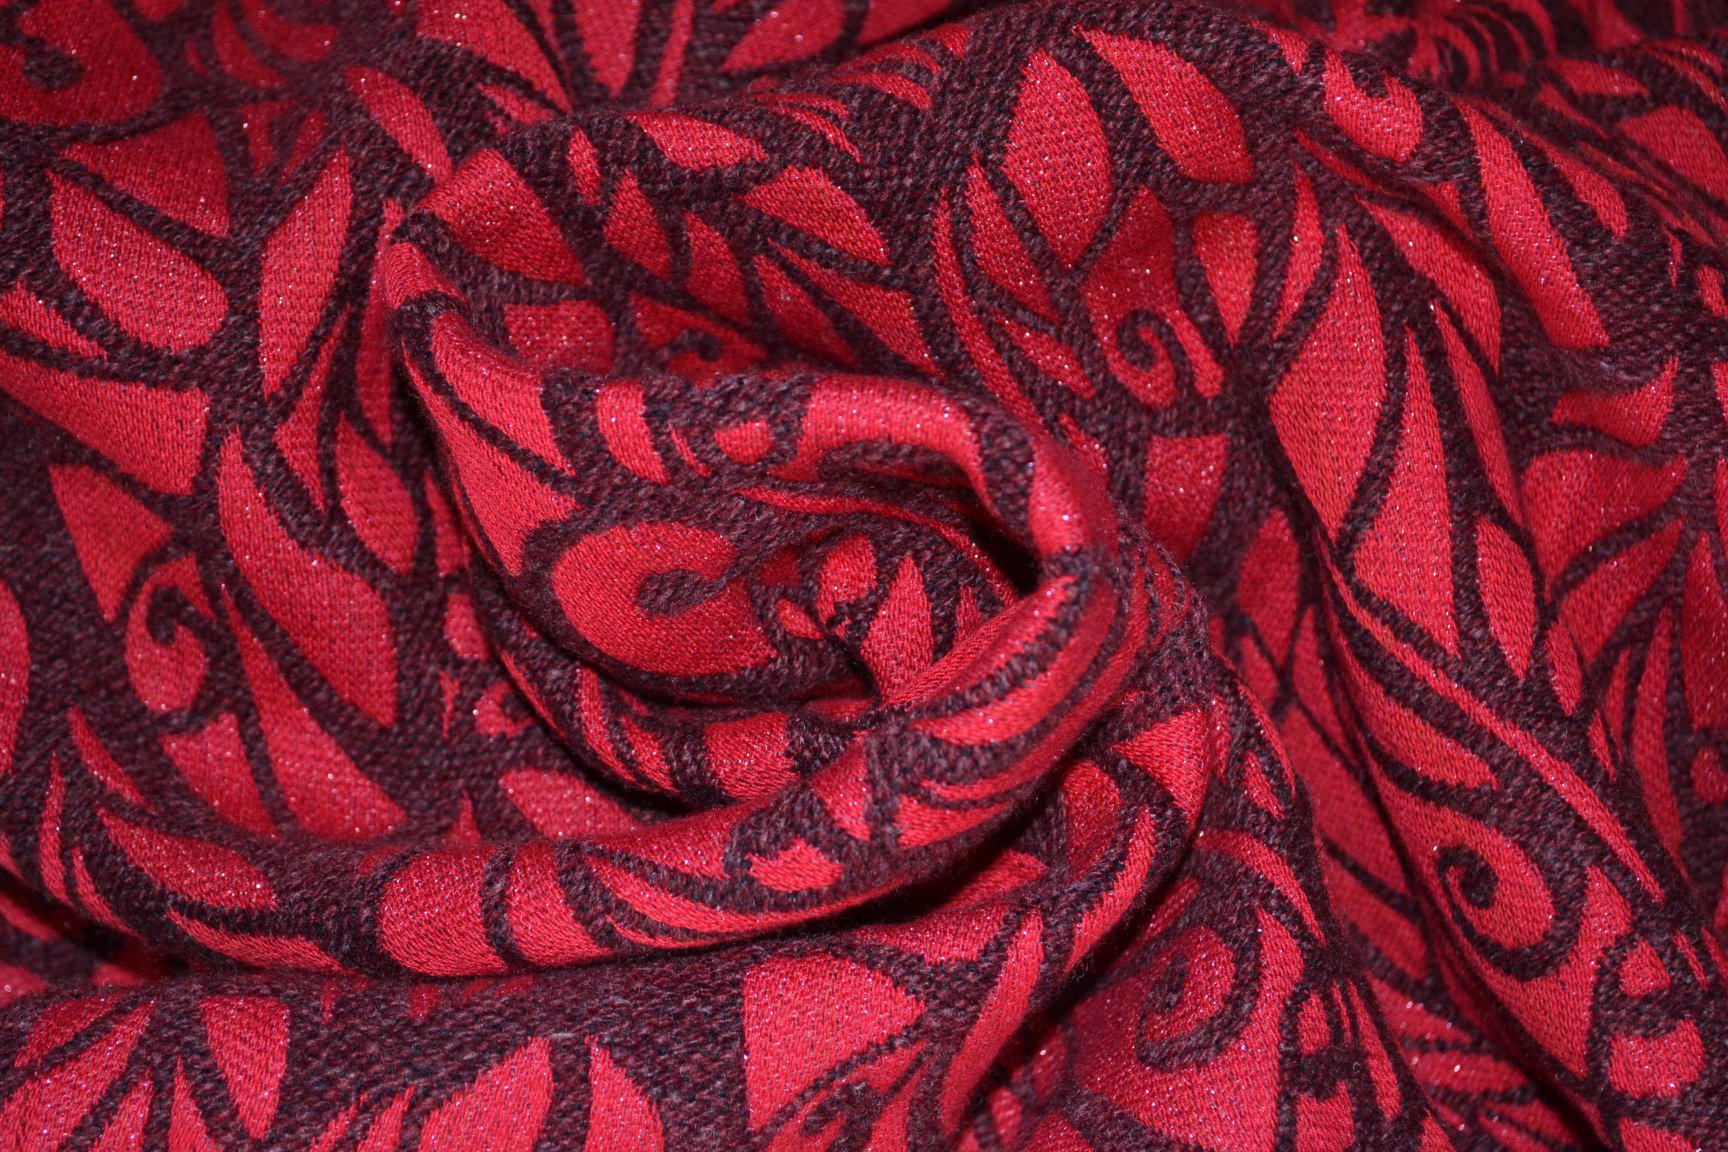 Solnce Genesis Little Red Riding Hood Wrap (cashmere, merino, glitter) Image